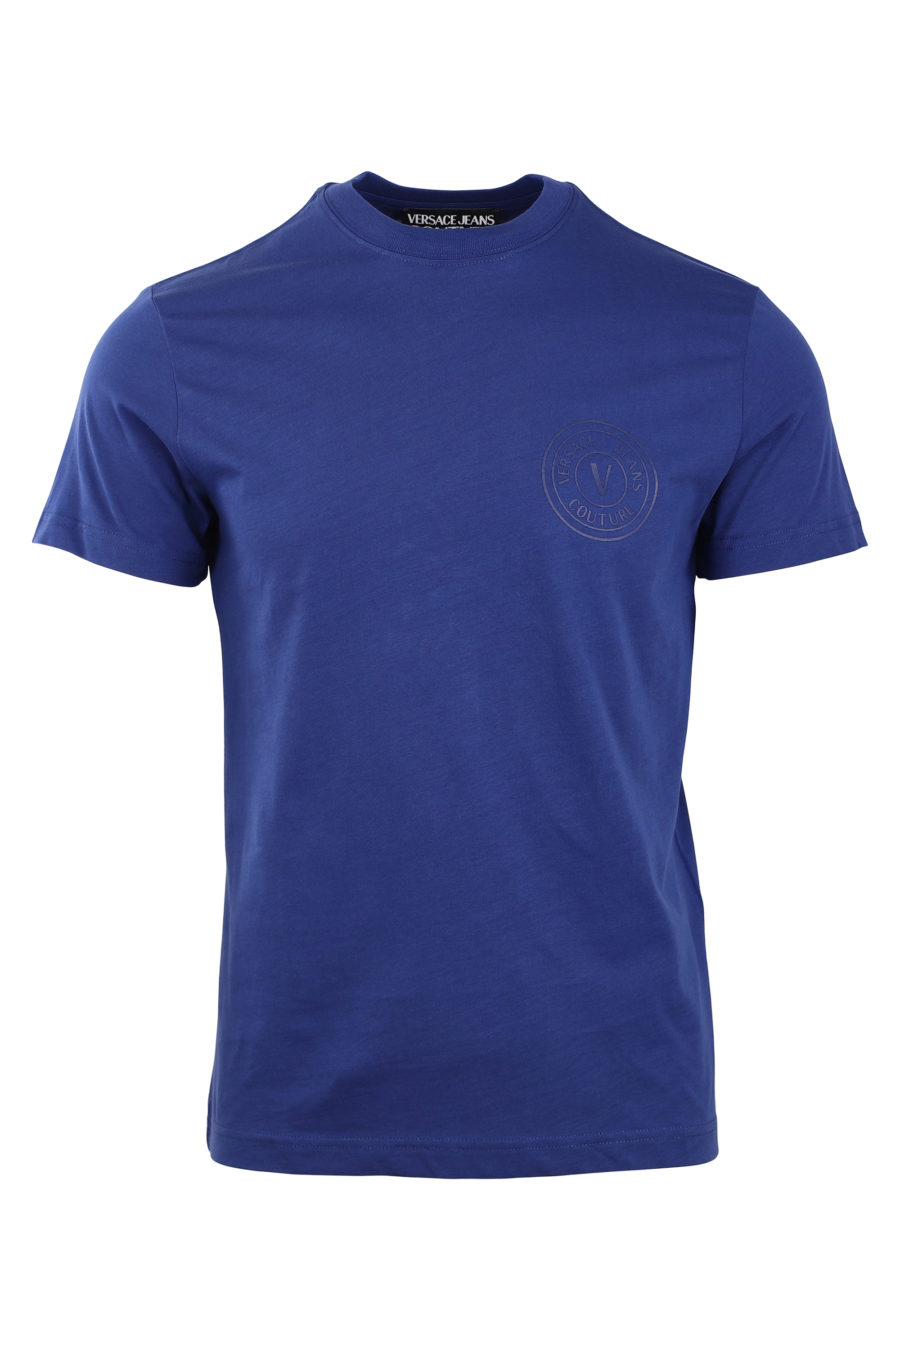 T-shirt bleu marine avec petit logo rond - IMG 0769